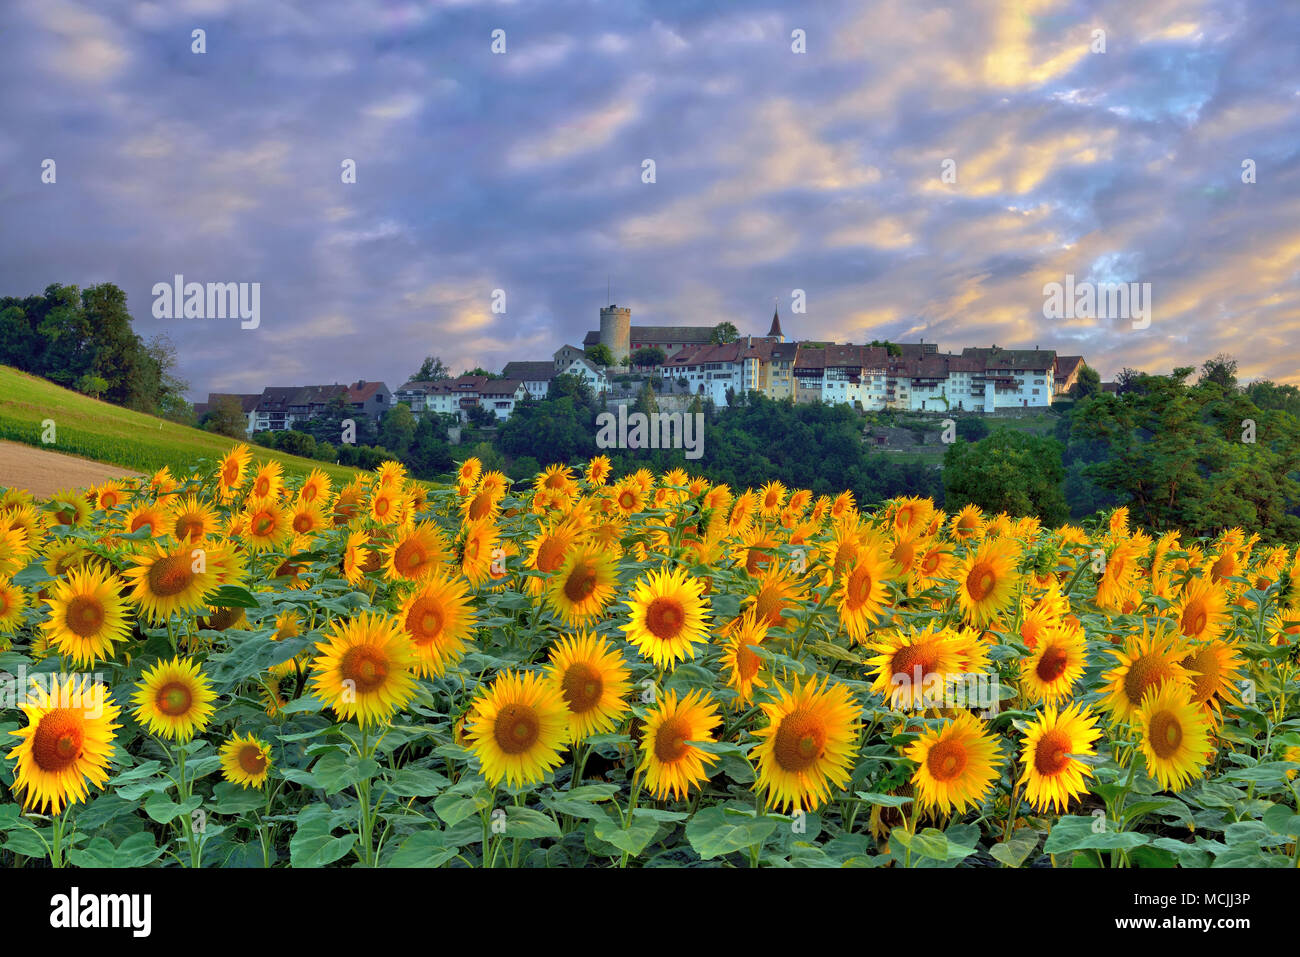 View of the village with clouds, in front sunflower field, Regensberg, Canton Zurich, Switzerland Stock Photo